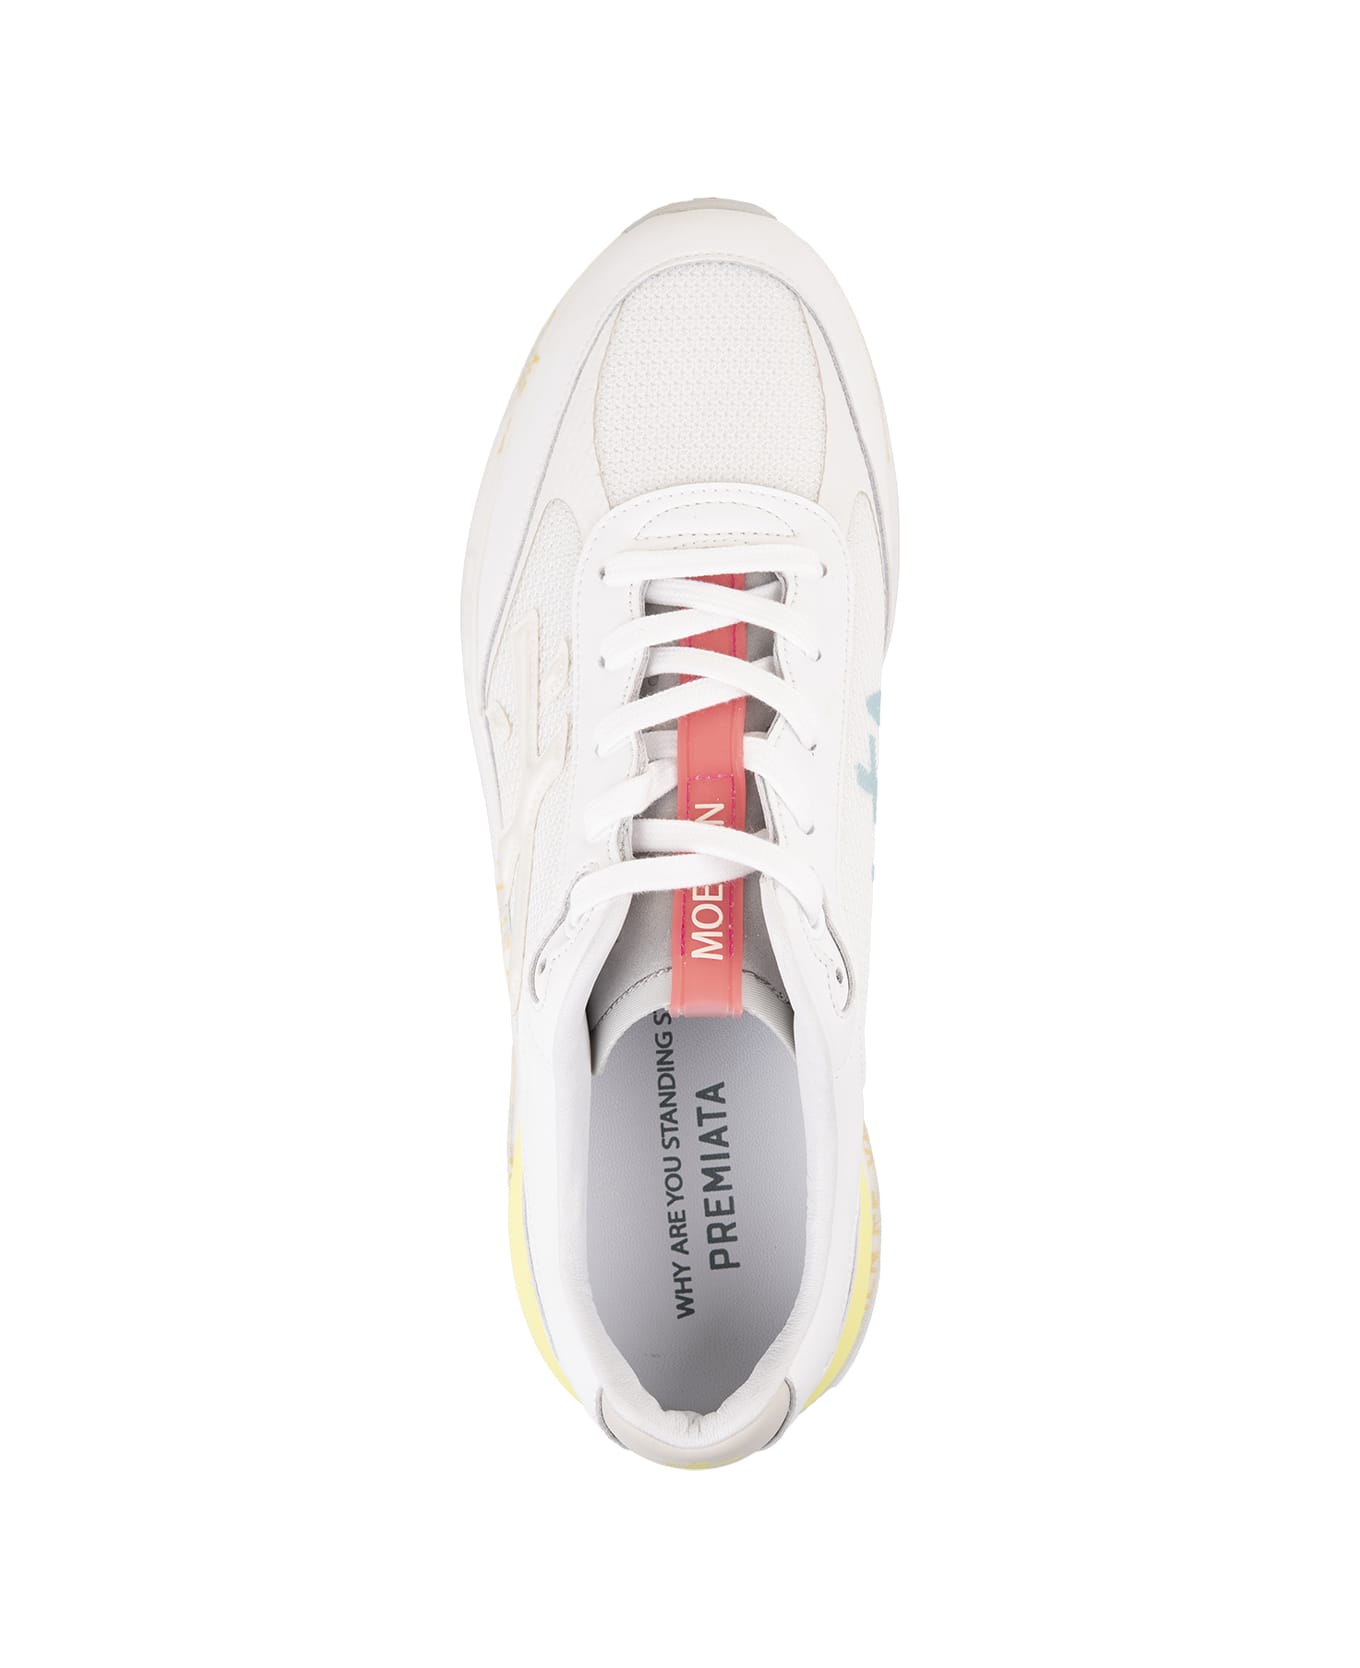 Premiata Moerun 6822 Sneakers - White